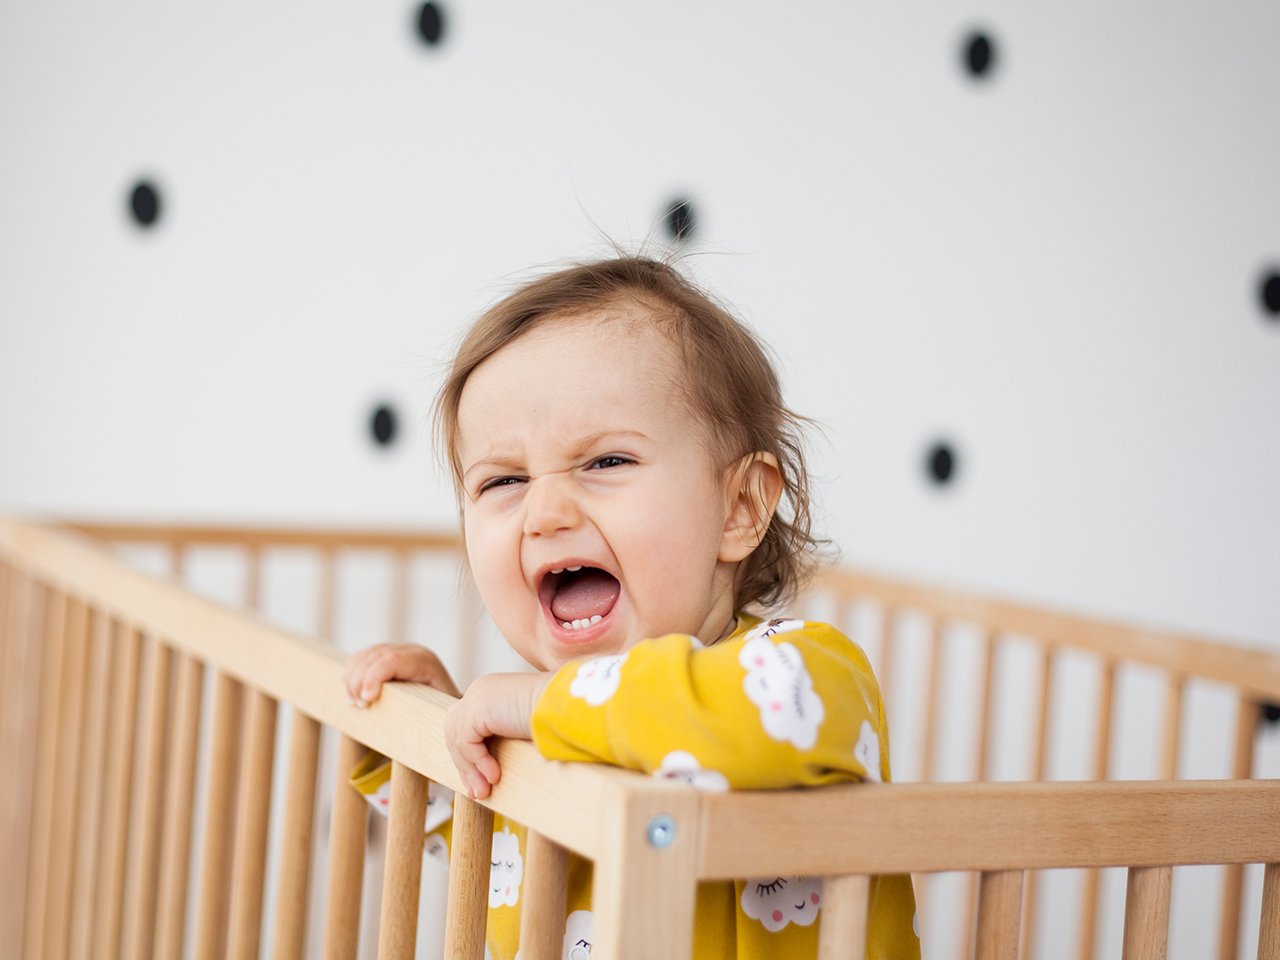 A little girl screaming in her crib